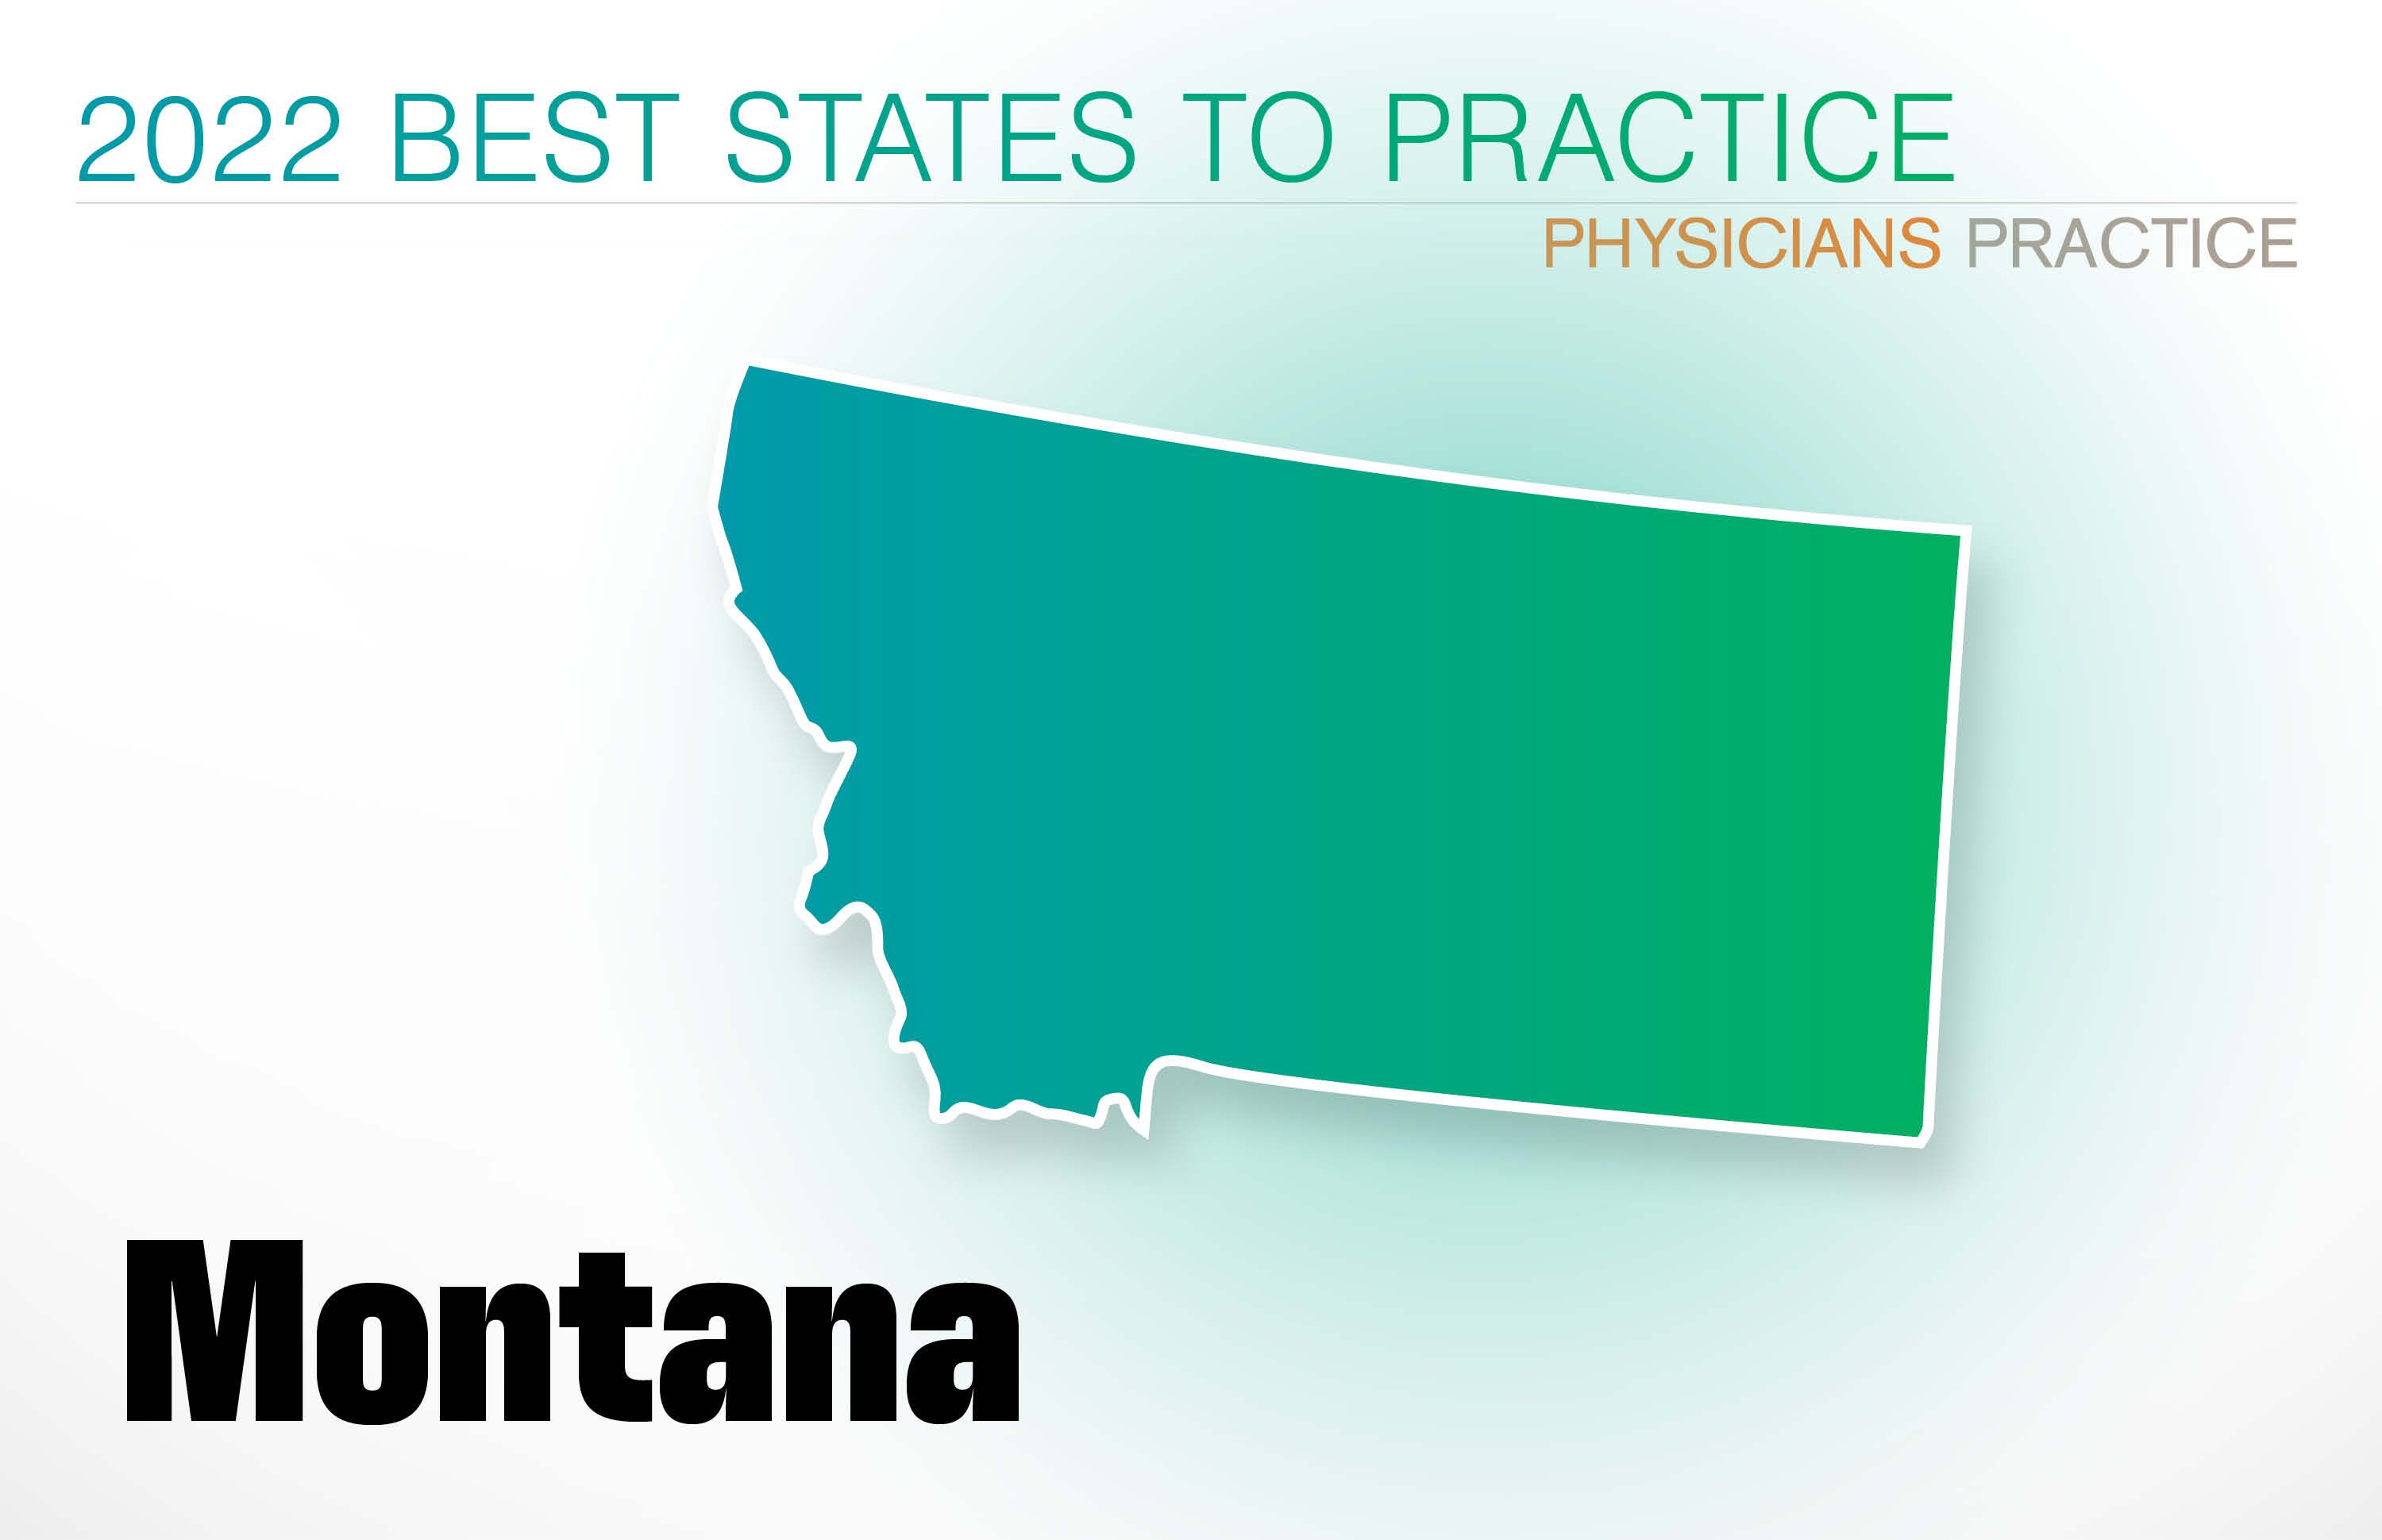 #5 Montana